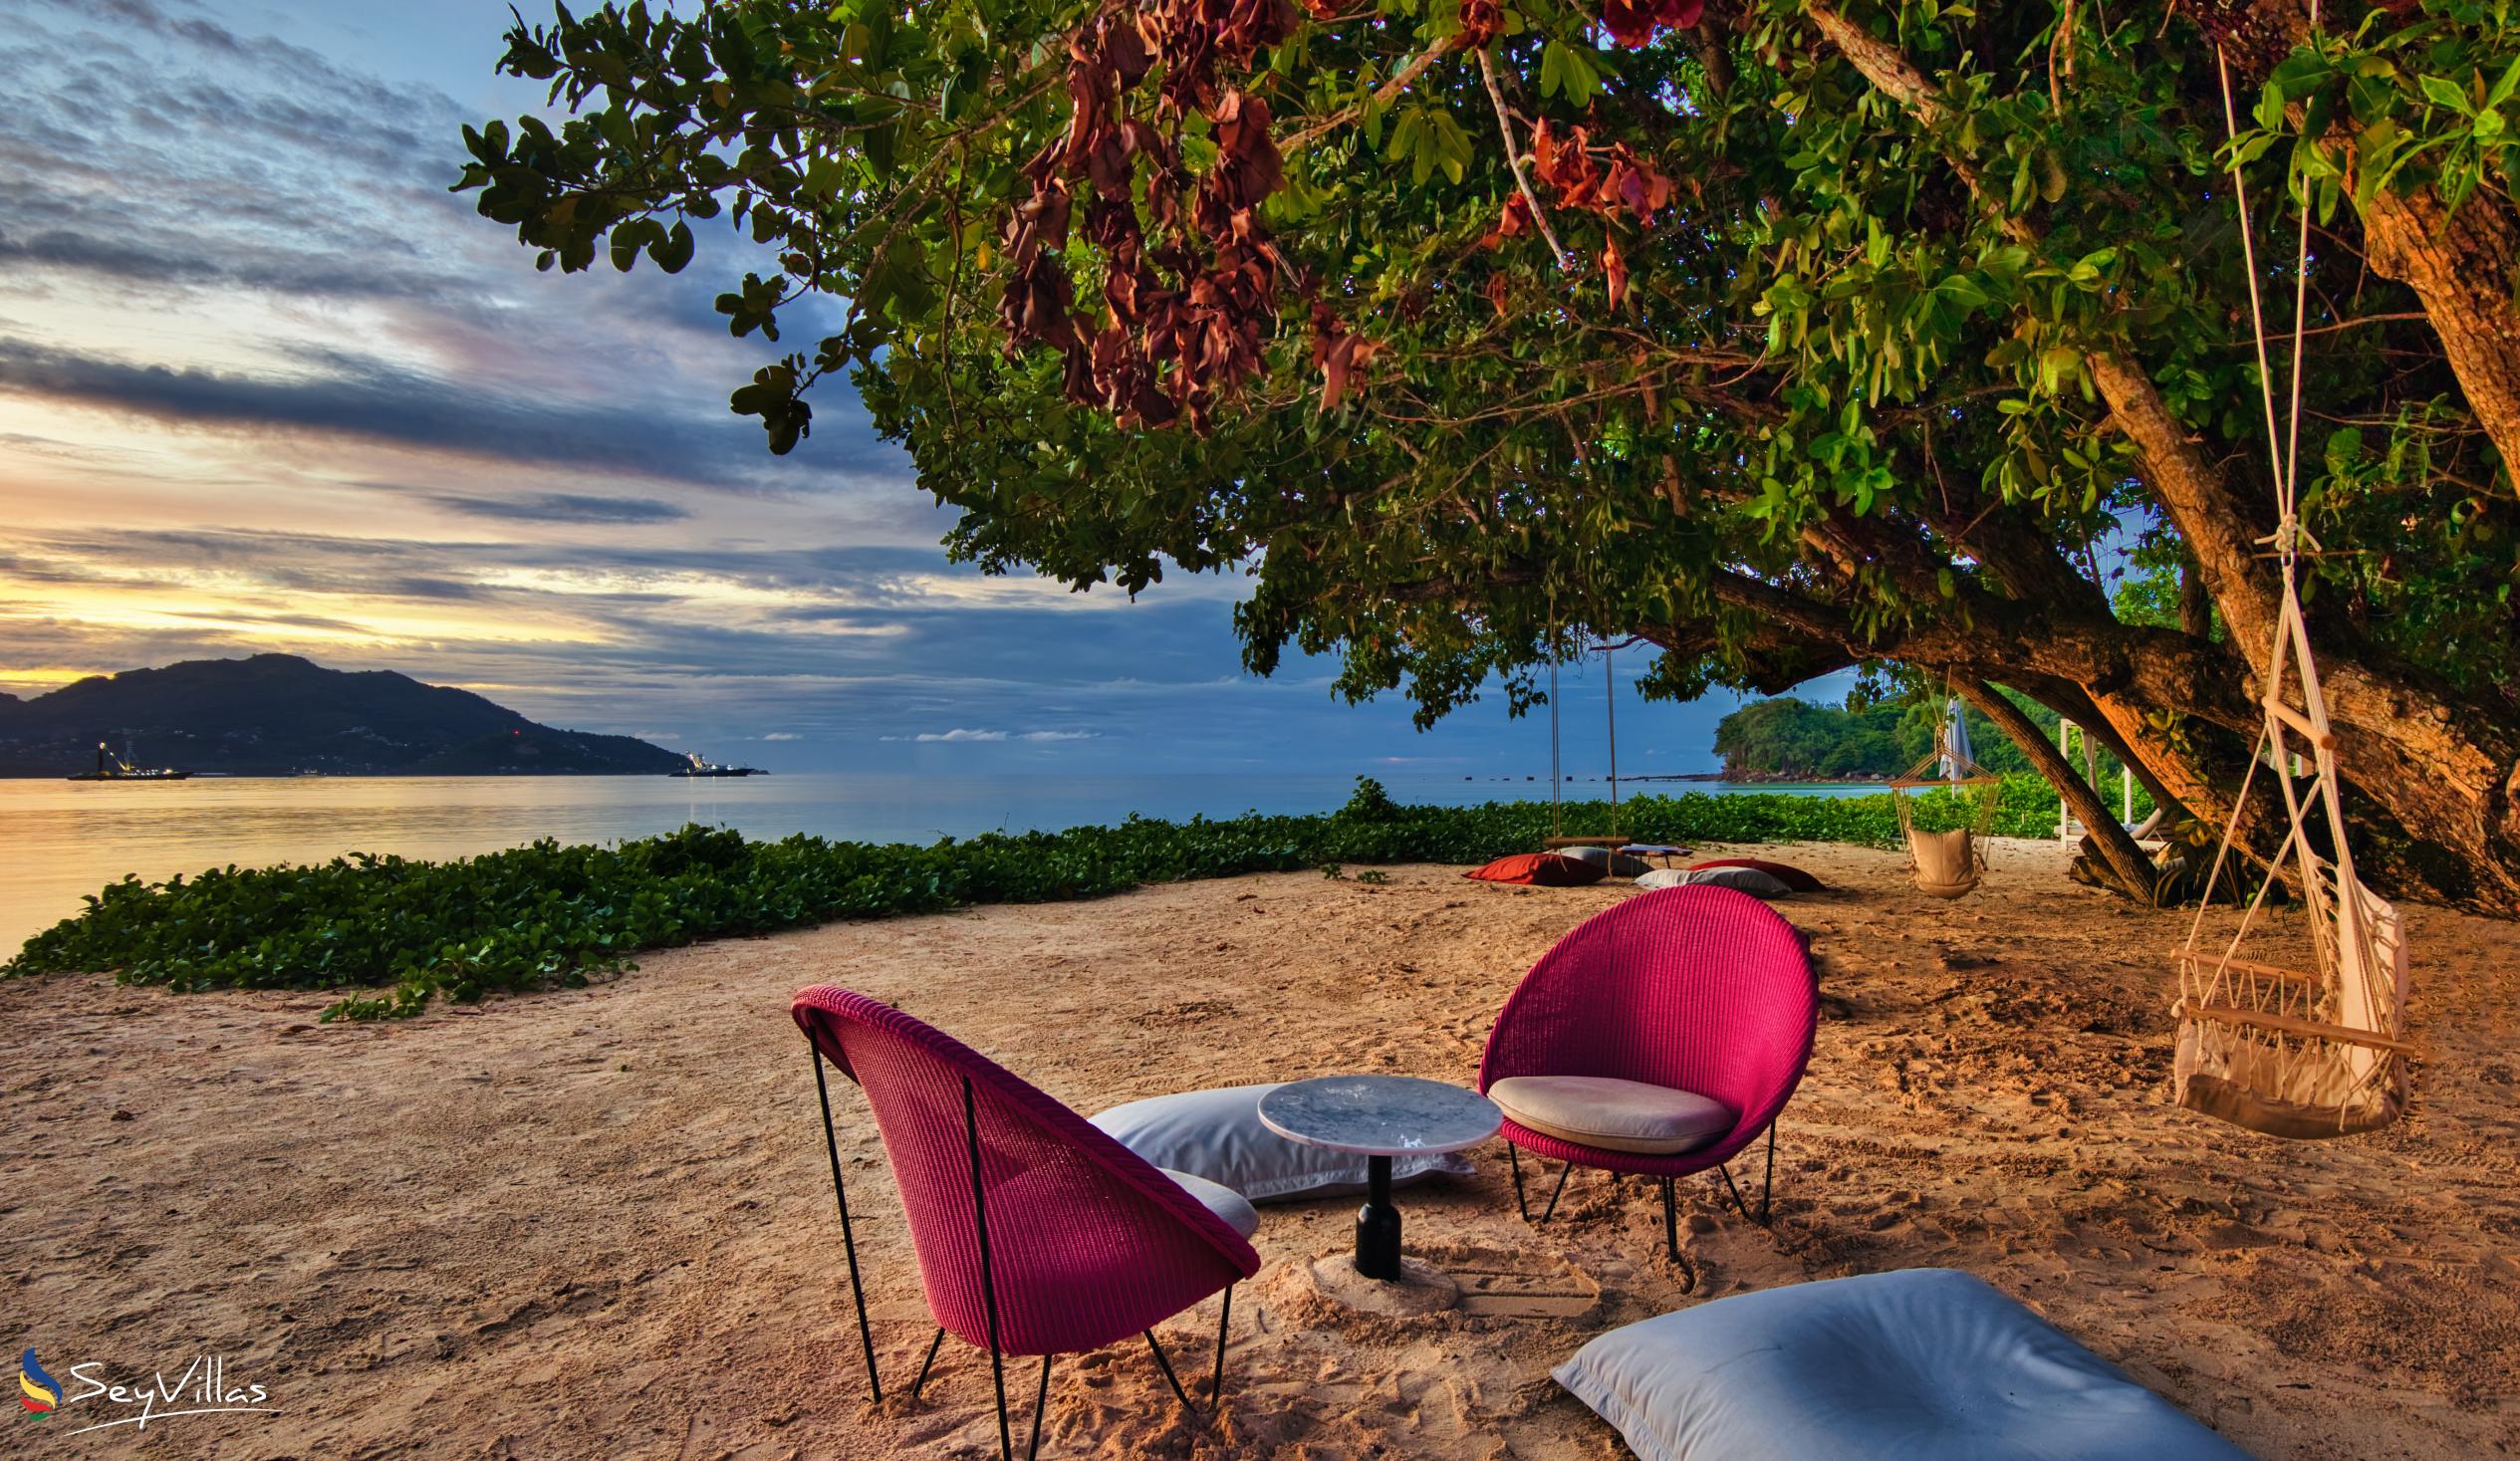 Photo 41: Club Med Seychelles - Location - Saint Anne (Seychelles)